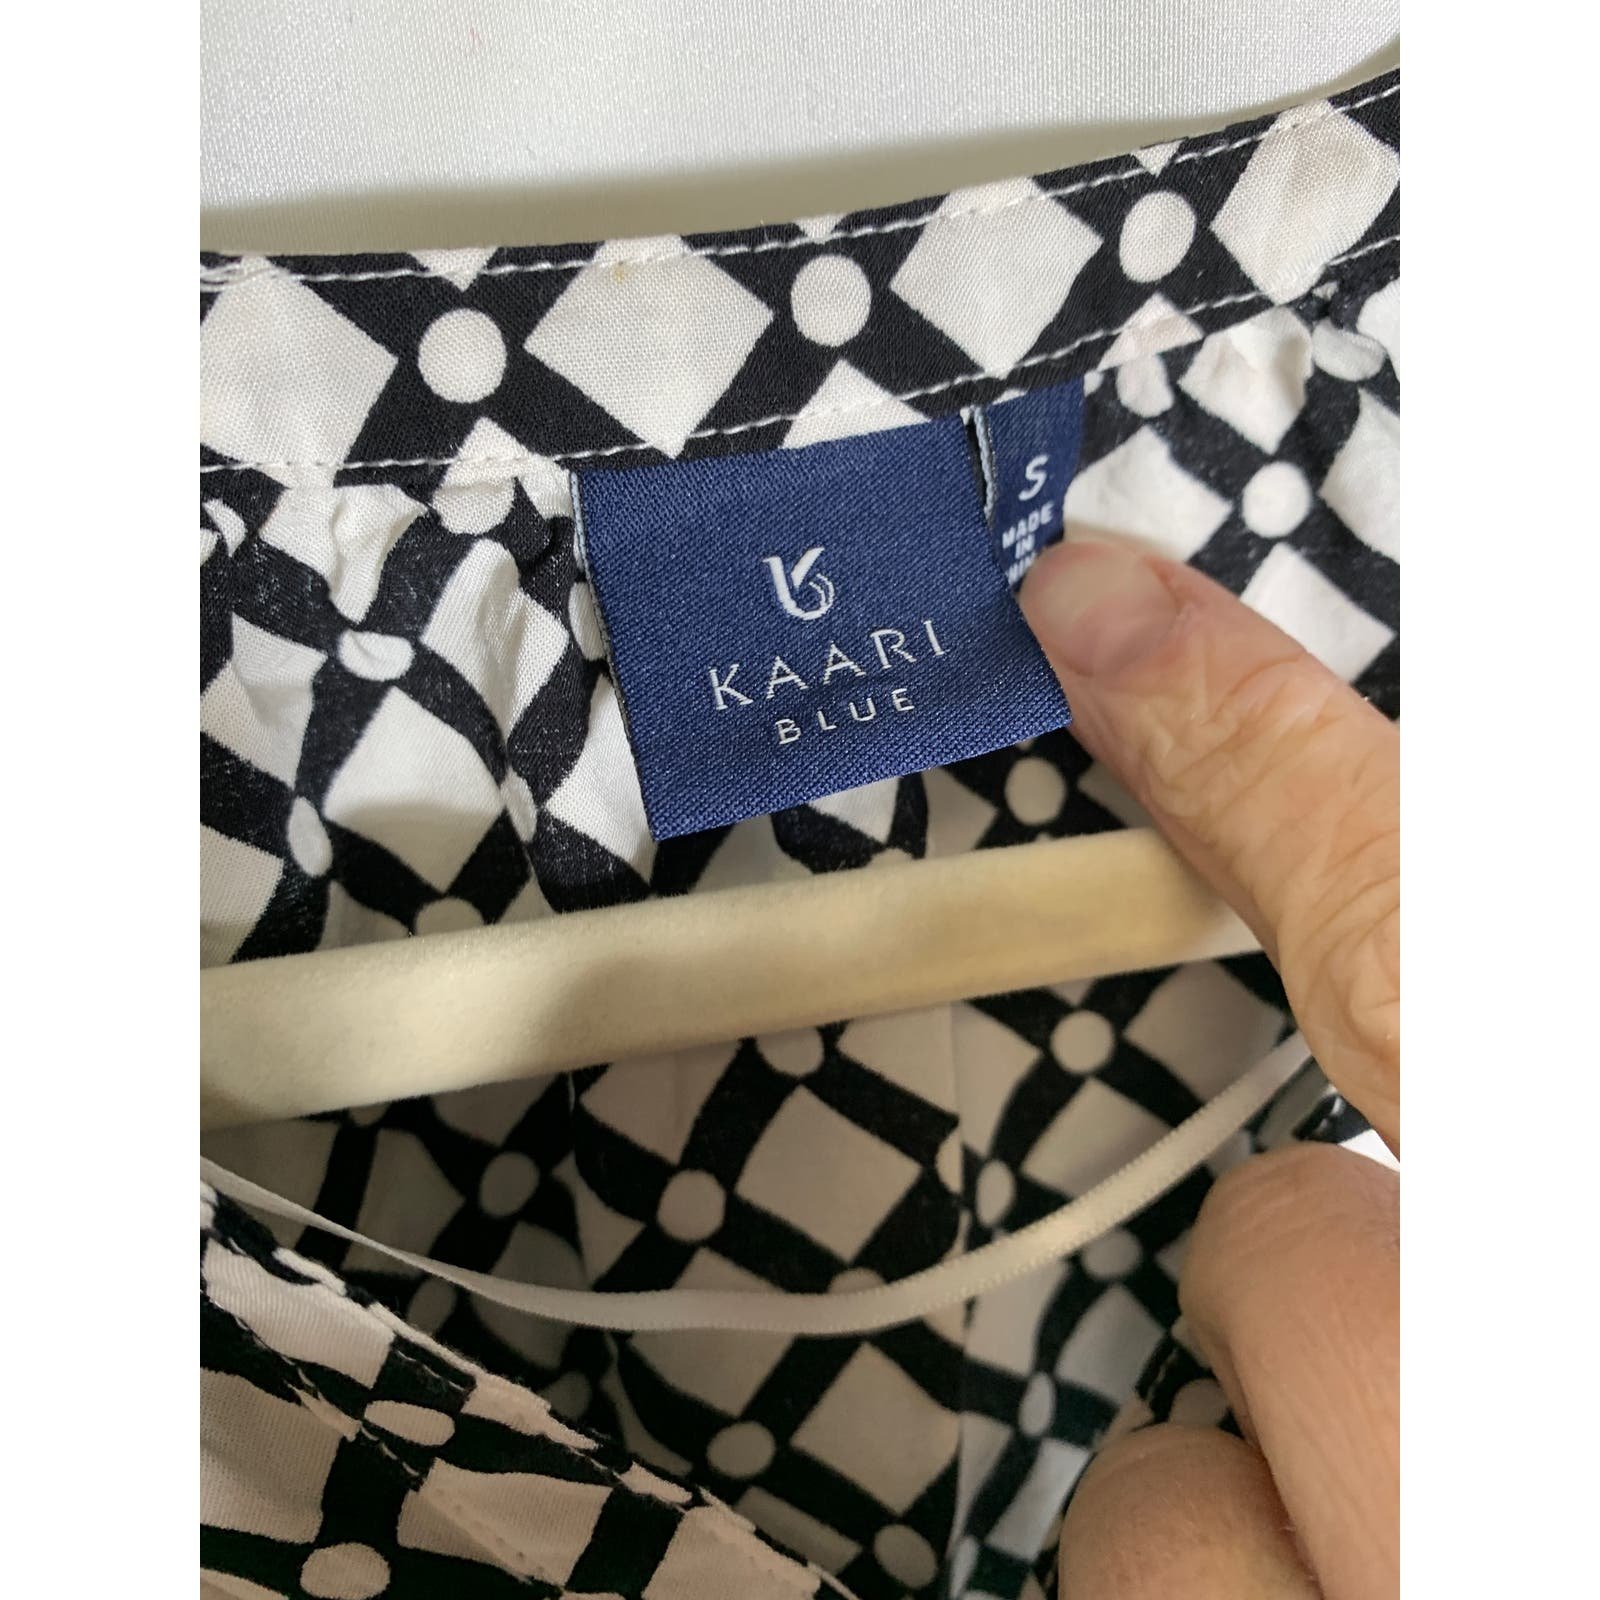 Latest  Kaari Blue White Black Patterned V-Neck Blouse Sz S MsLaXm2cx Wholesale